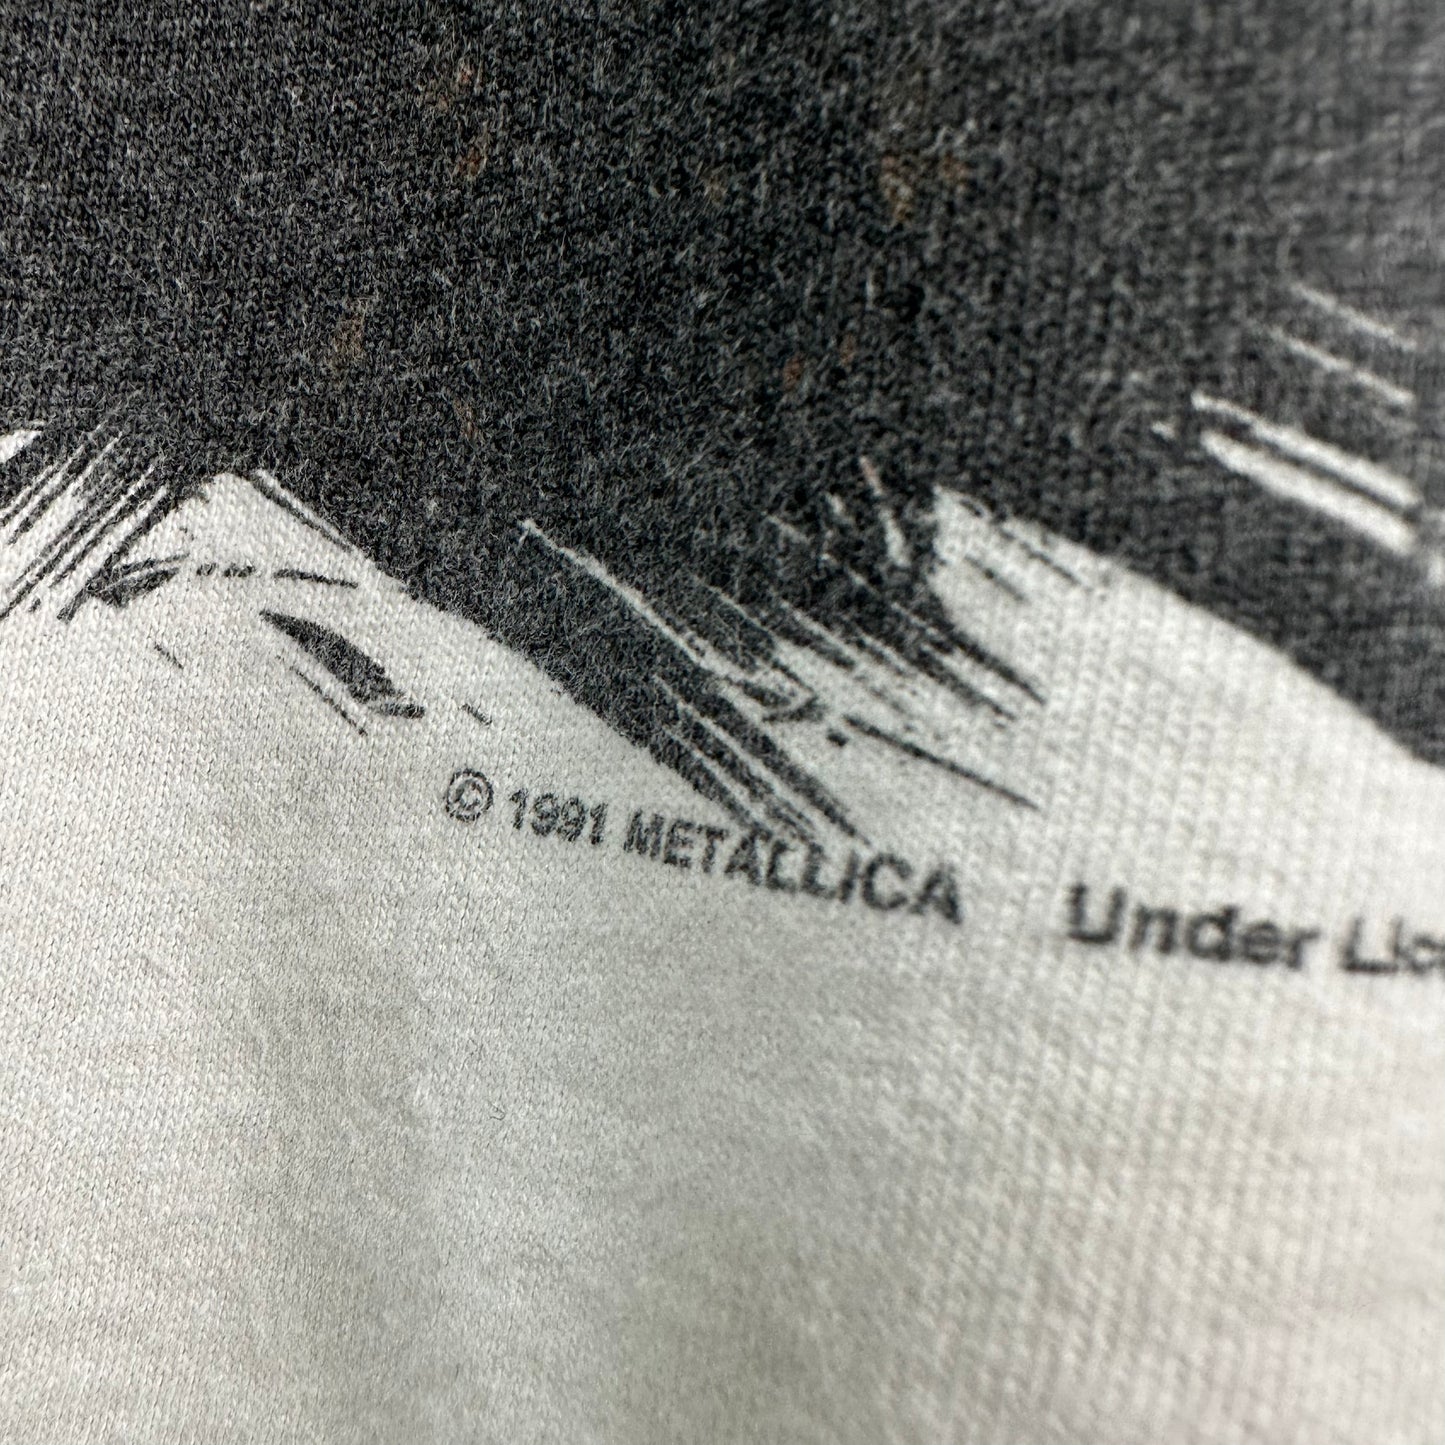 1991 Metallica Stage Set Shirt - XL